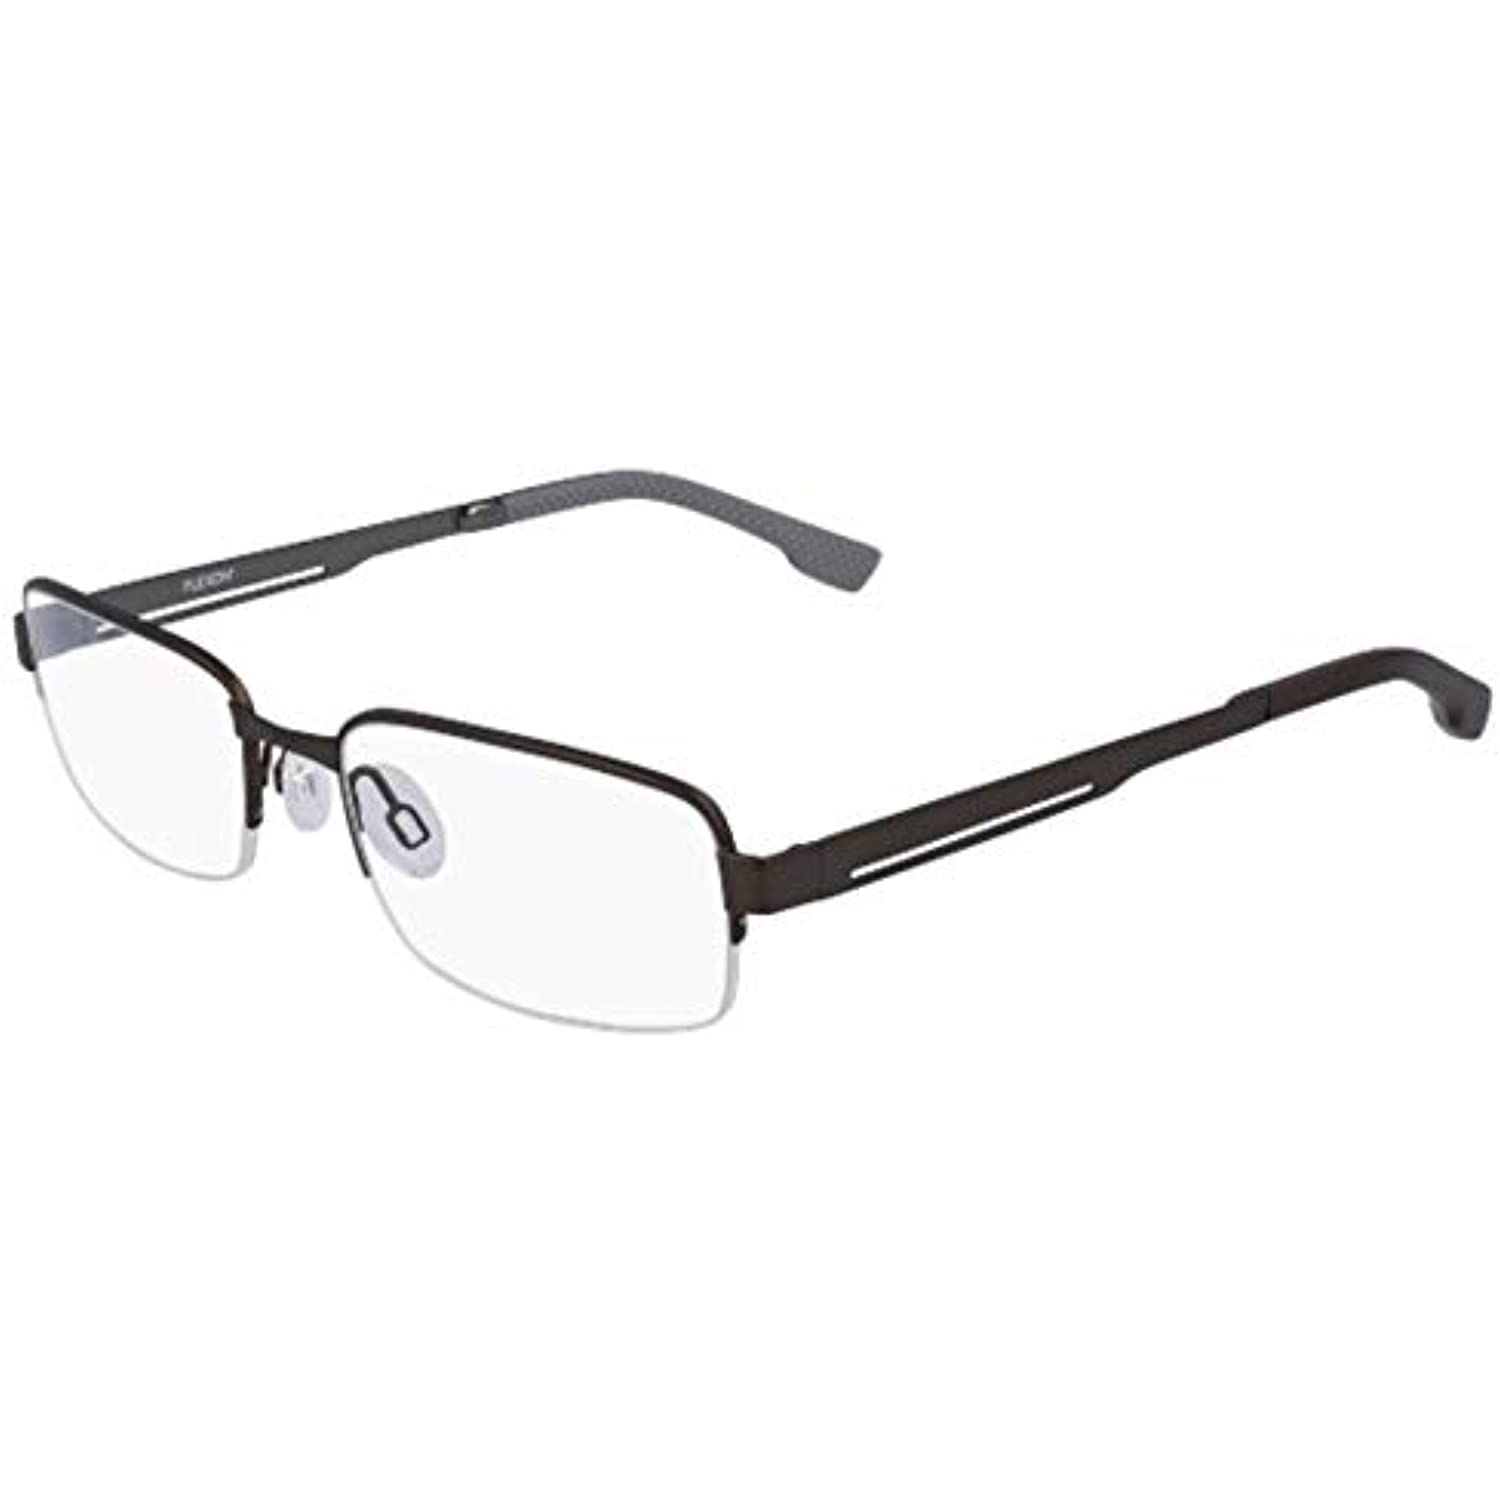 NEW FLEXON E1047 210 Brown Flexible Titanium Eyeglasses 54mm with